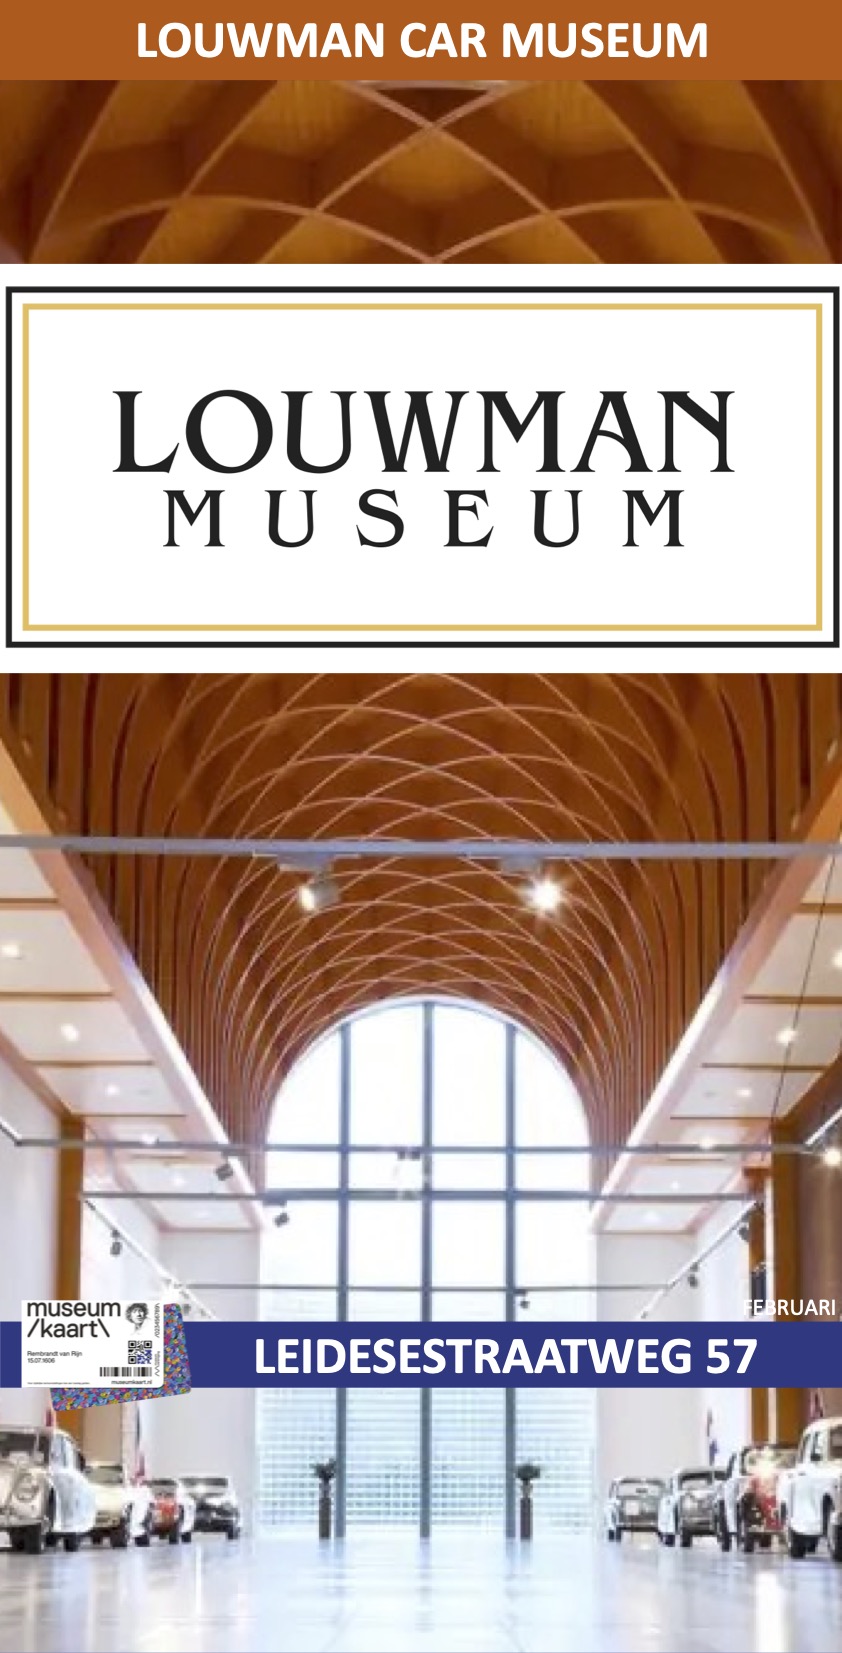 Louwman Automuseum Wassenaar Museumkaart februari